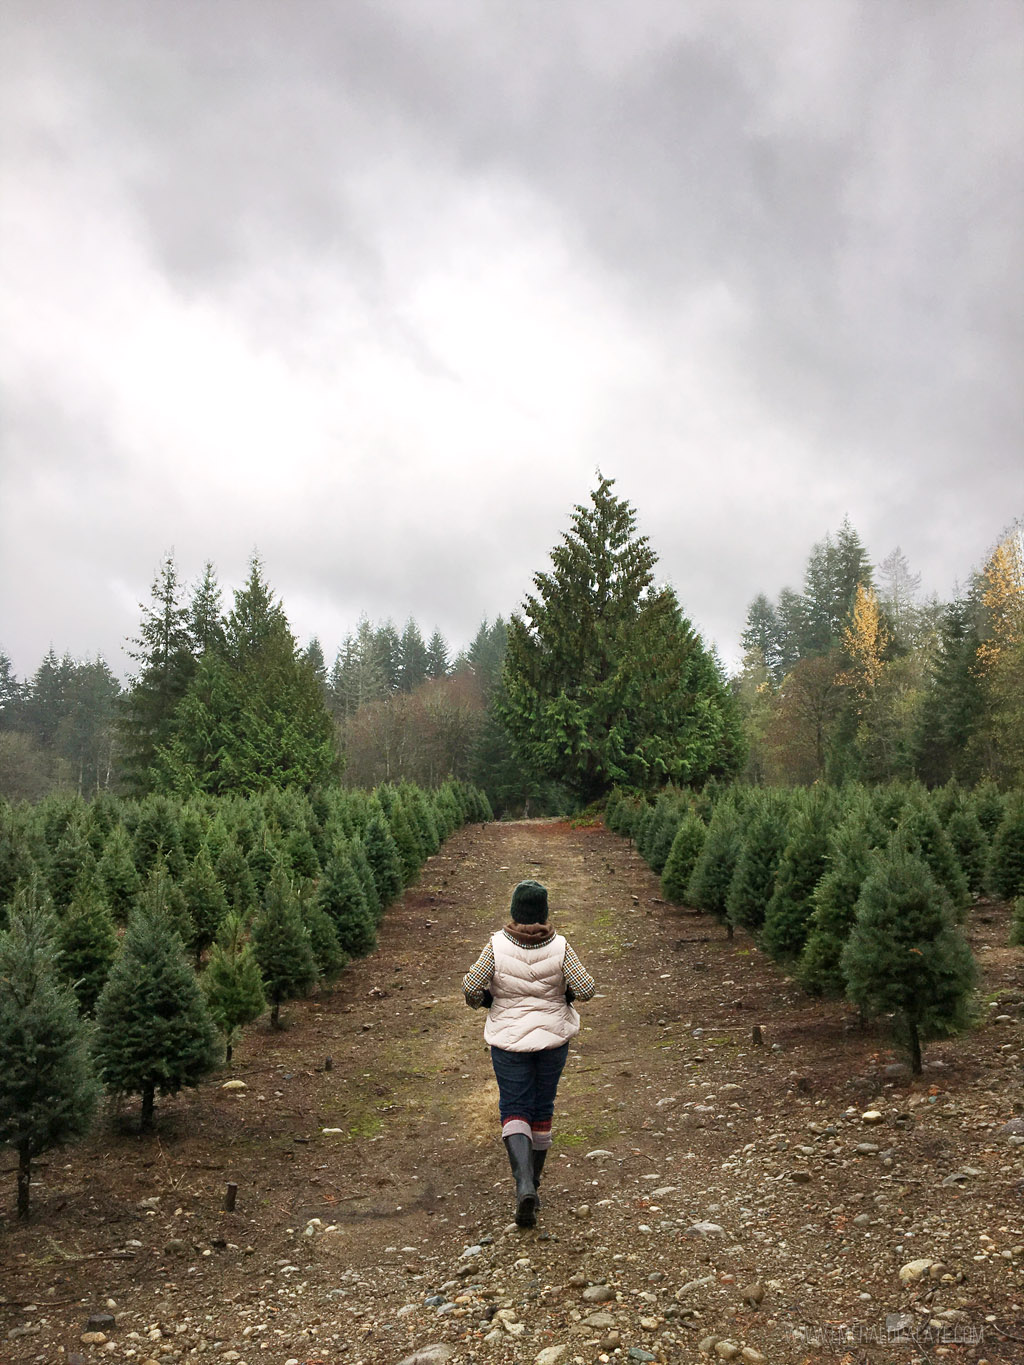 woman walking among evergreen trees on a tree farm